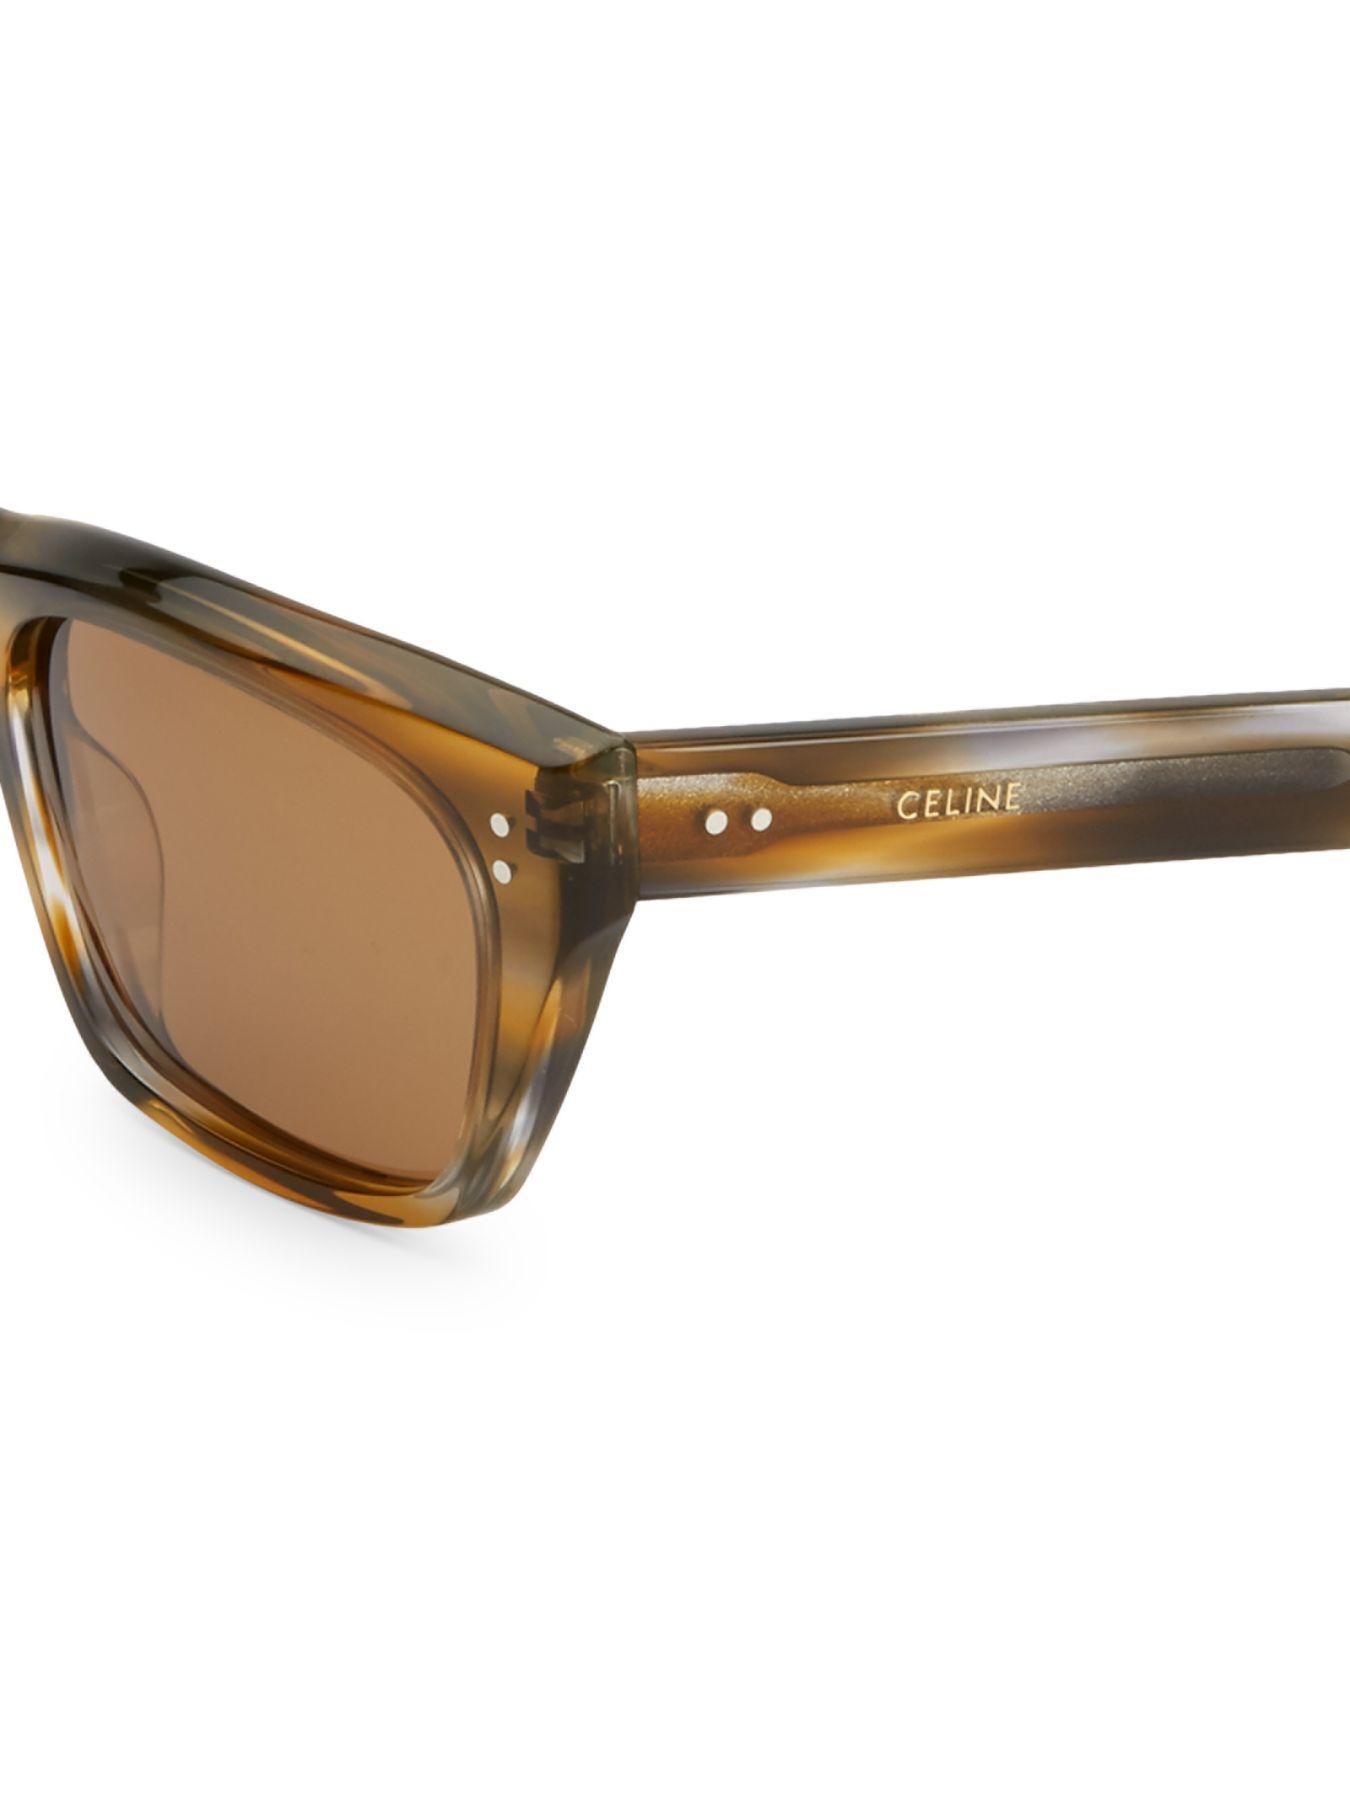 Celine 53mm Animal Print Square Sunglasses in Brown for Men - Save 8% ...